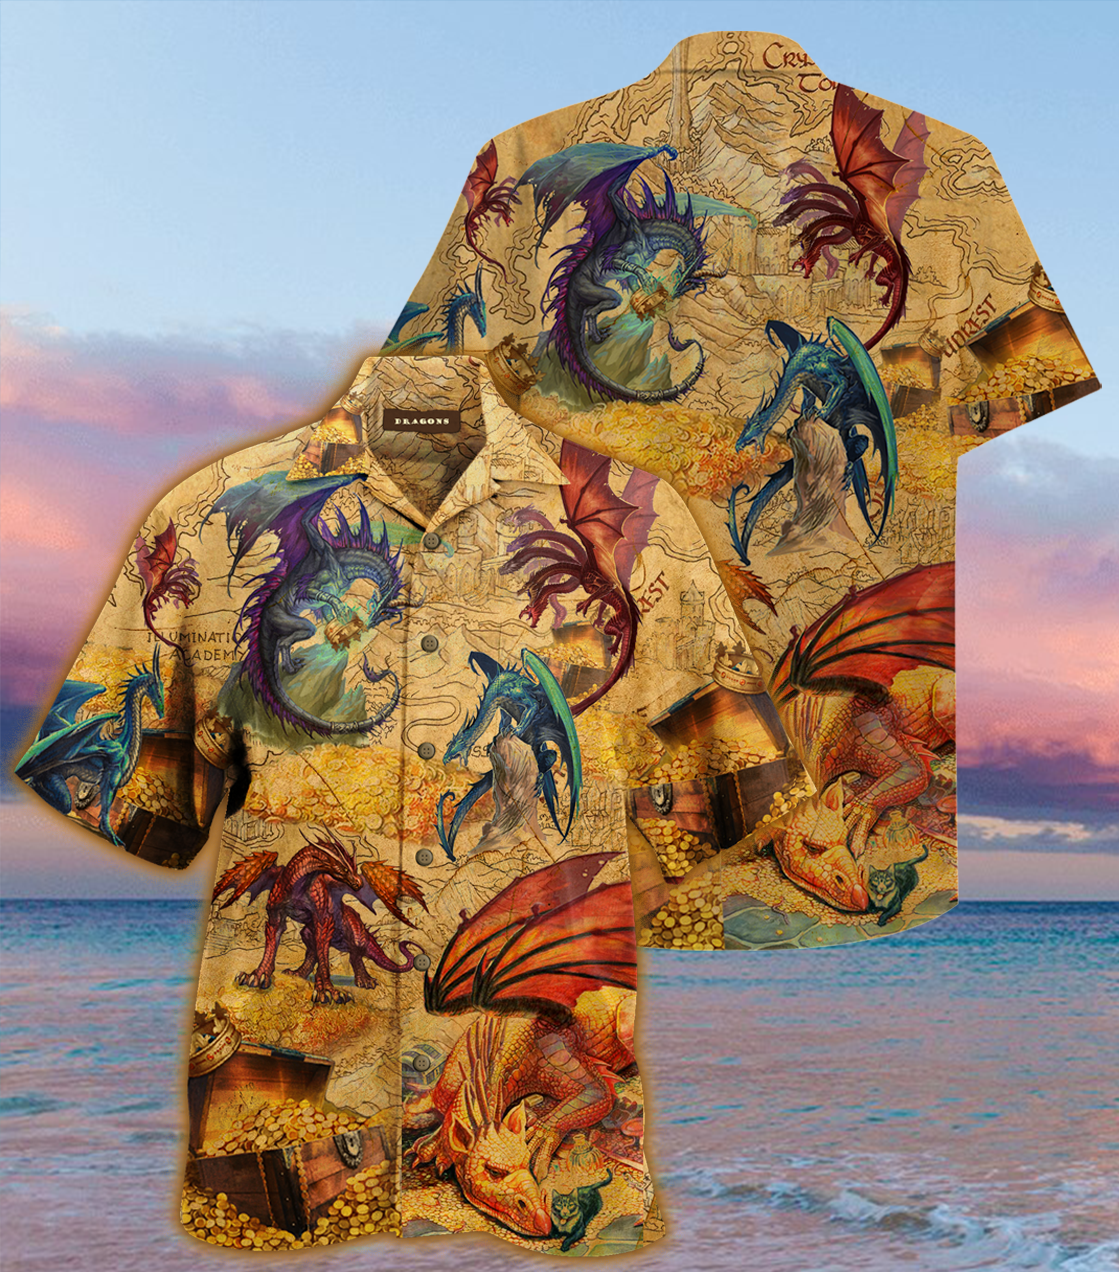 Every treasure is guarded by dragons Hawaiian Shirt